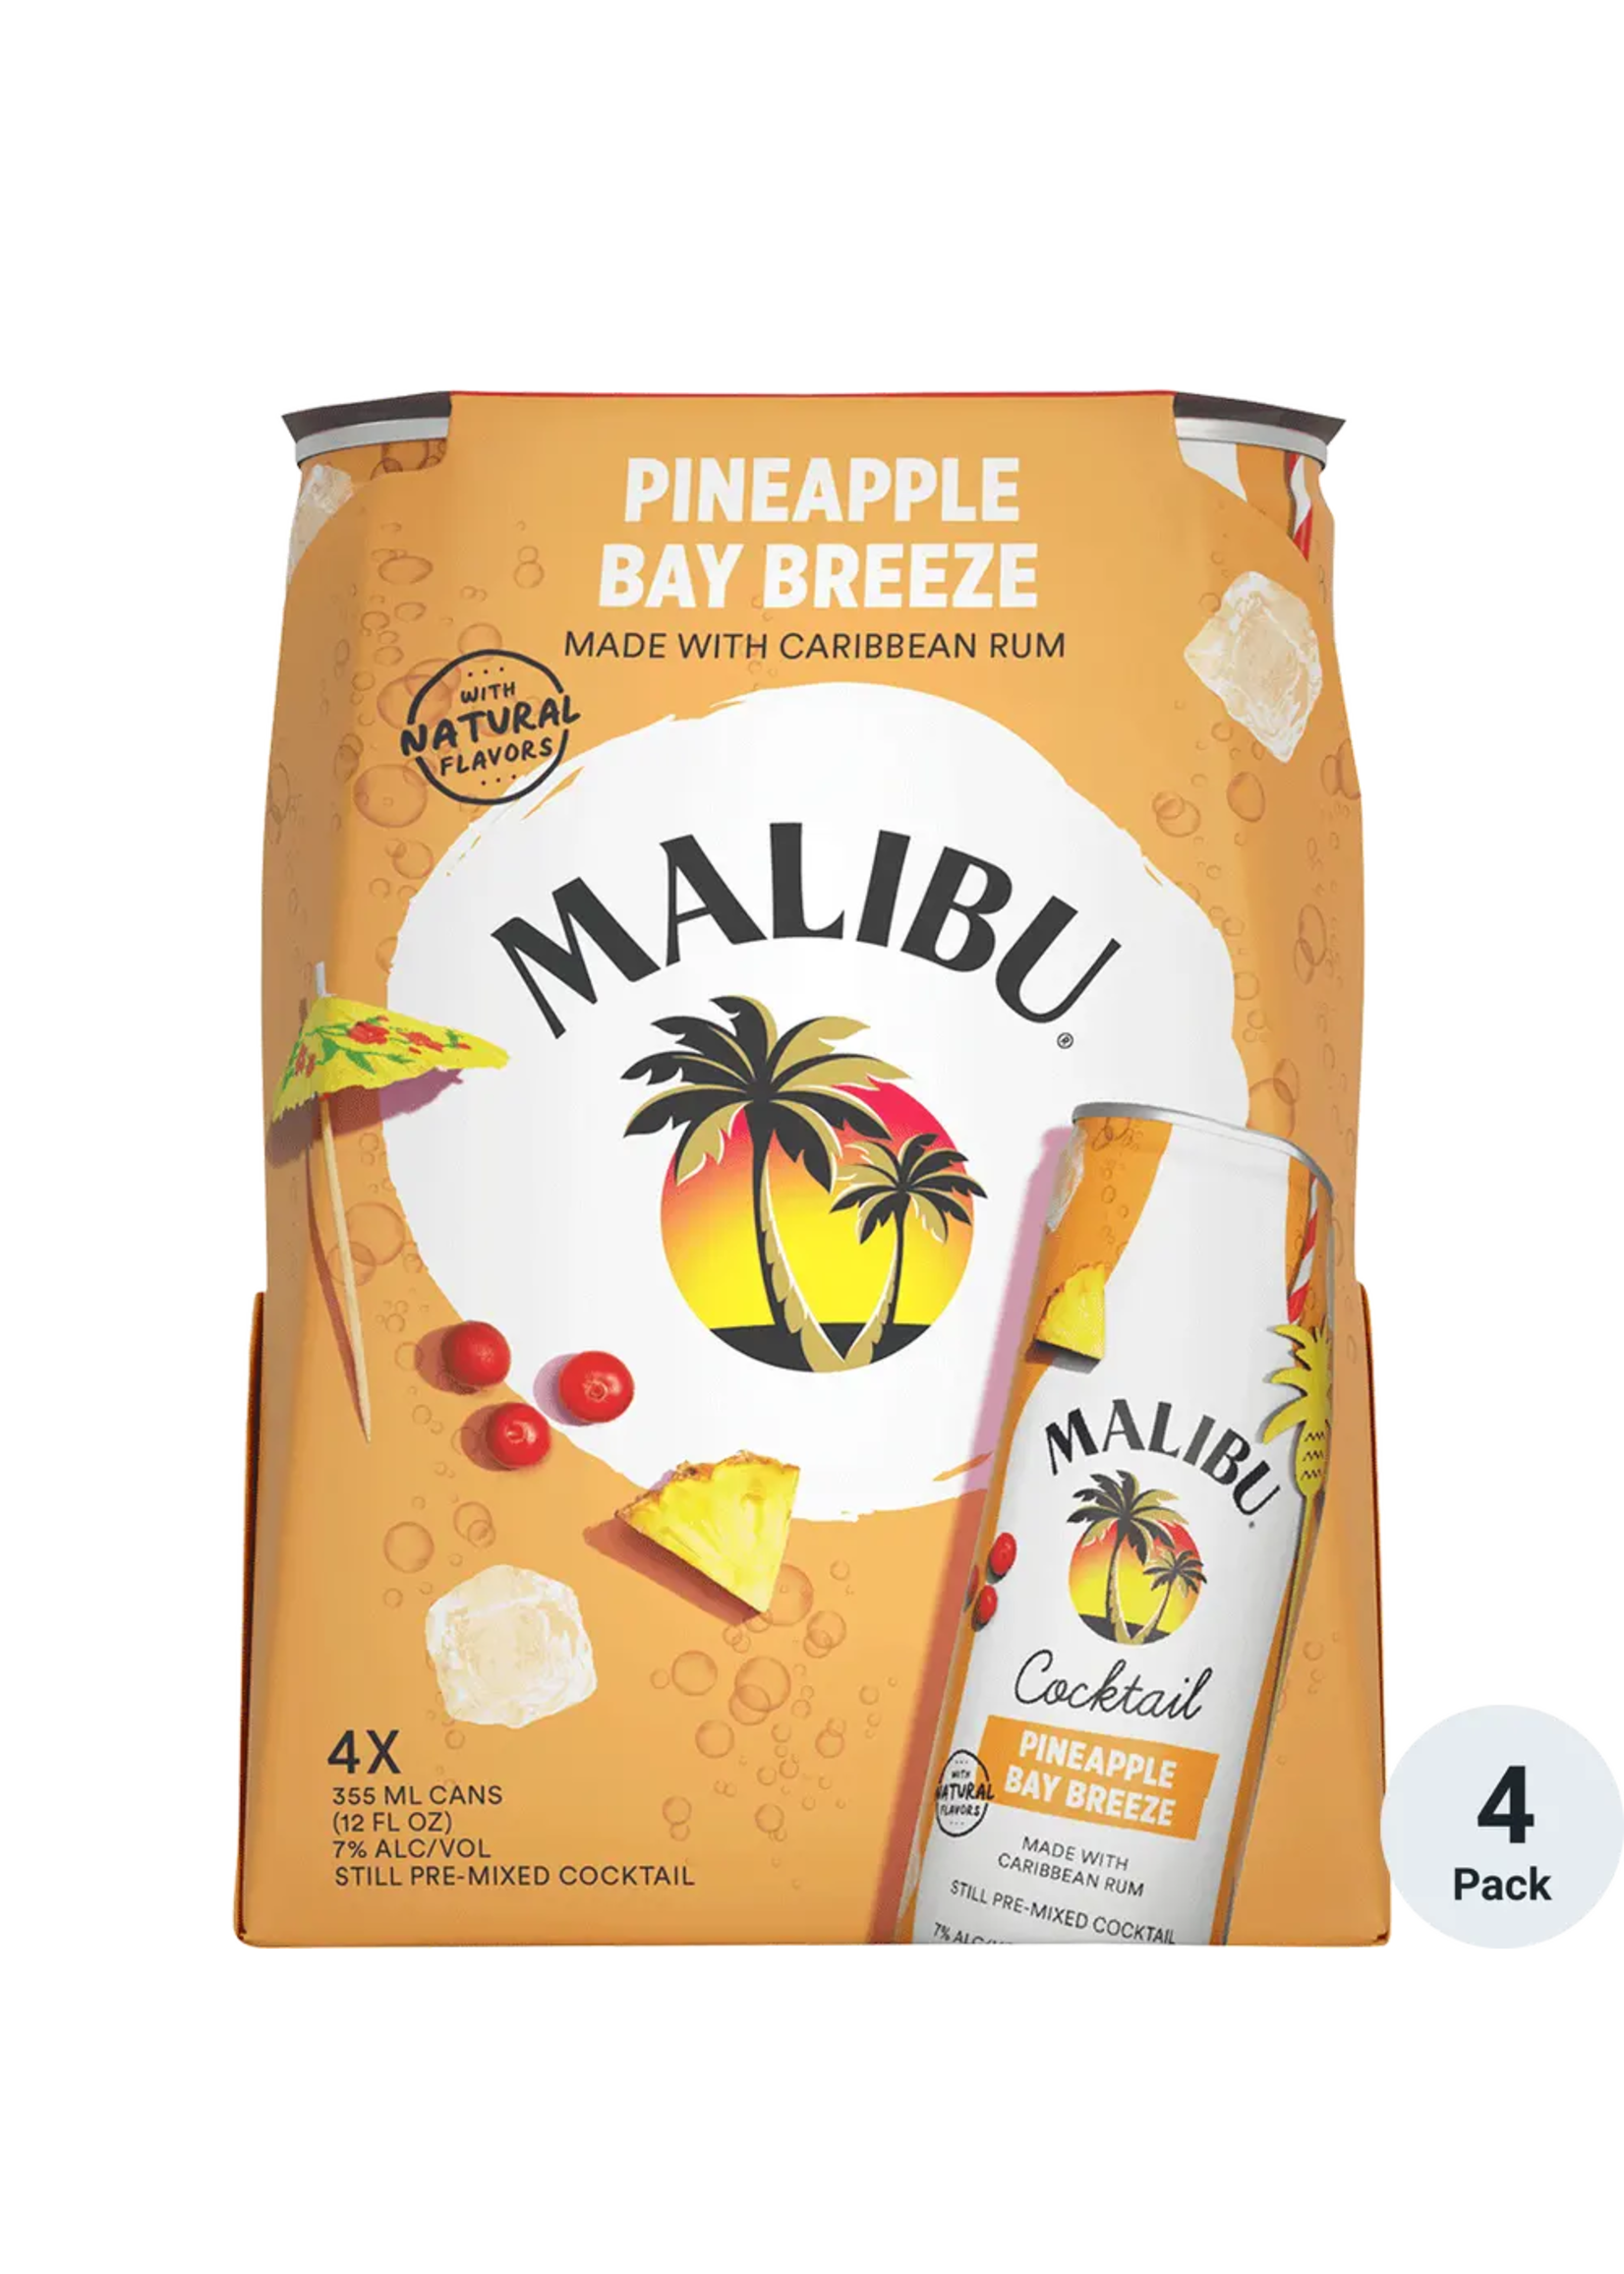 Malibu RTD Cocktail Pineapple Bay Breeze 14Proof 4pk 12oz Cans